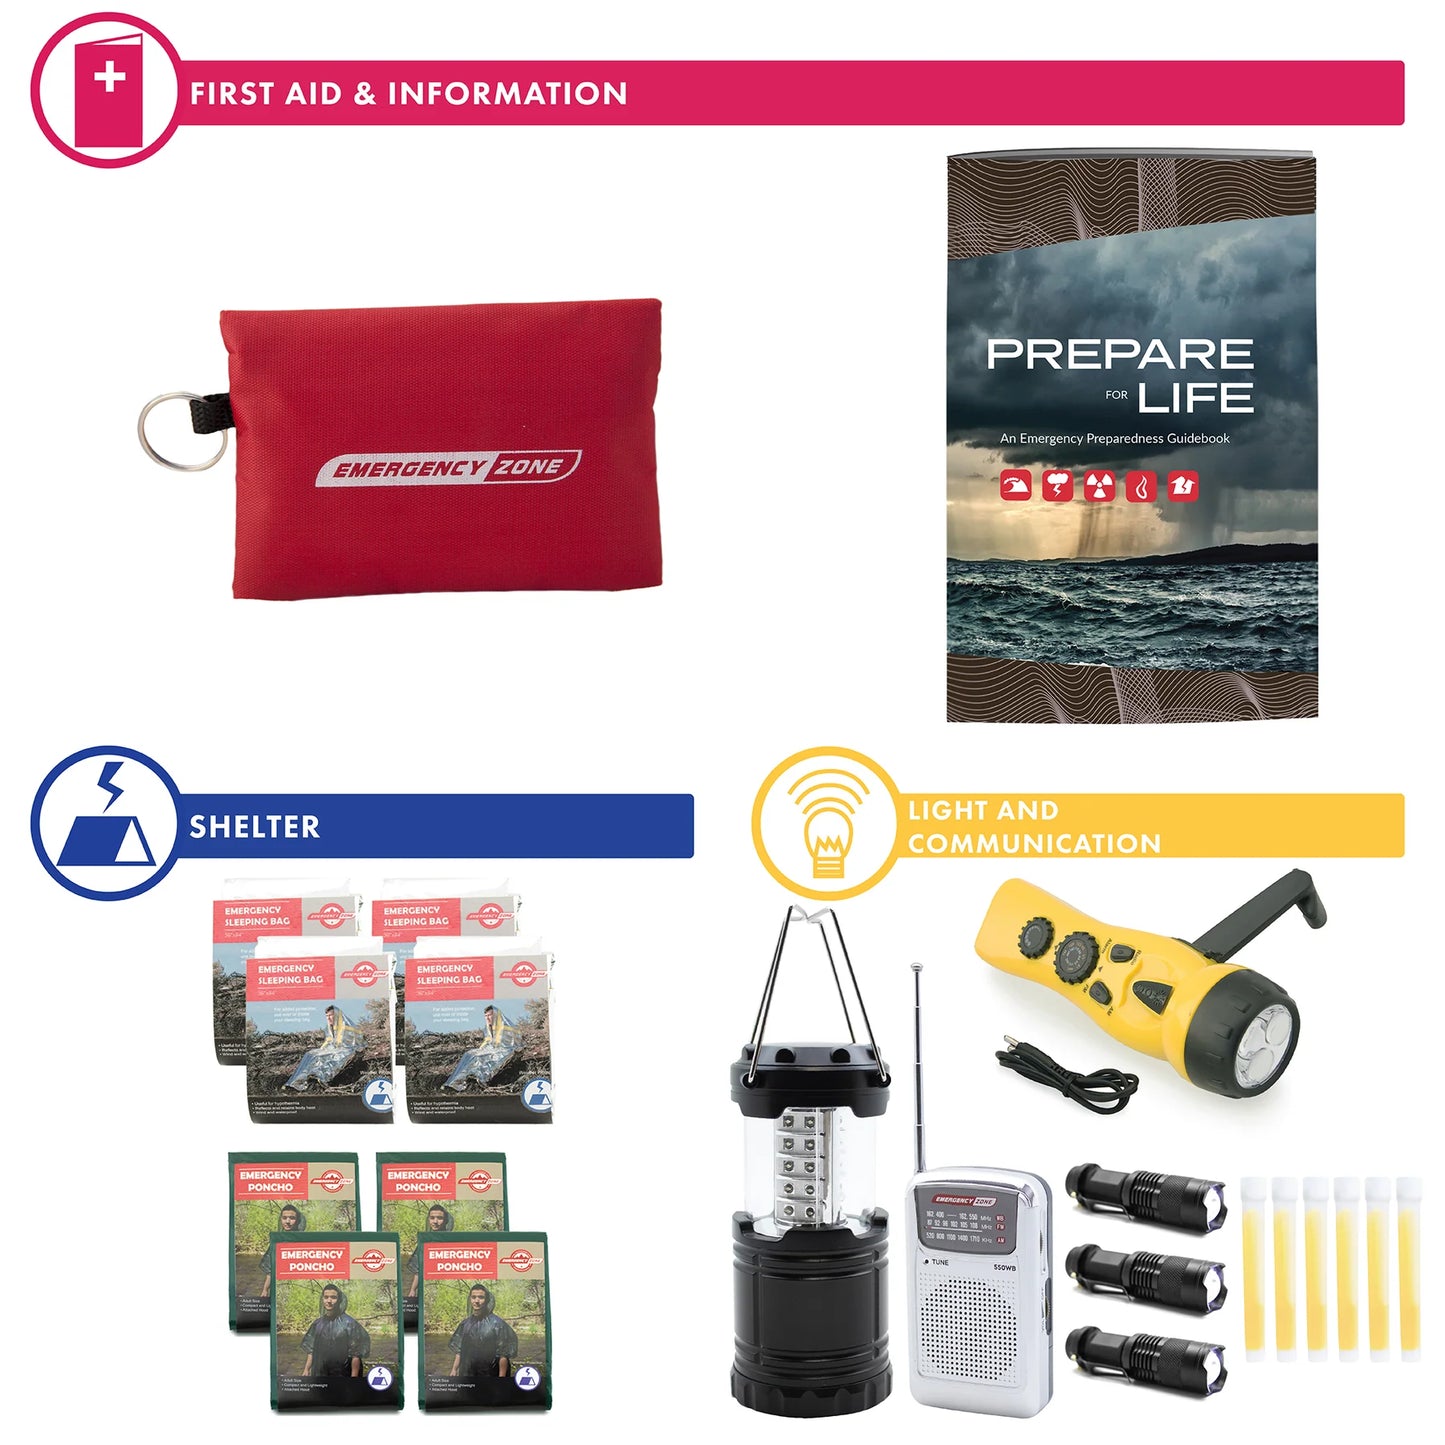 Emergency Zone Hurricane Survival Kit - 4 Person